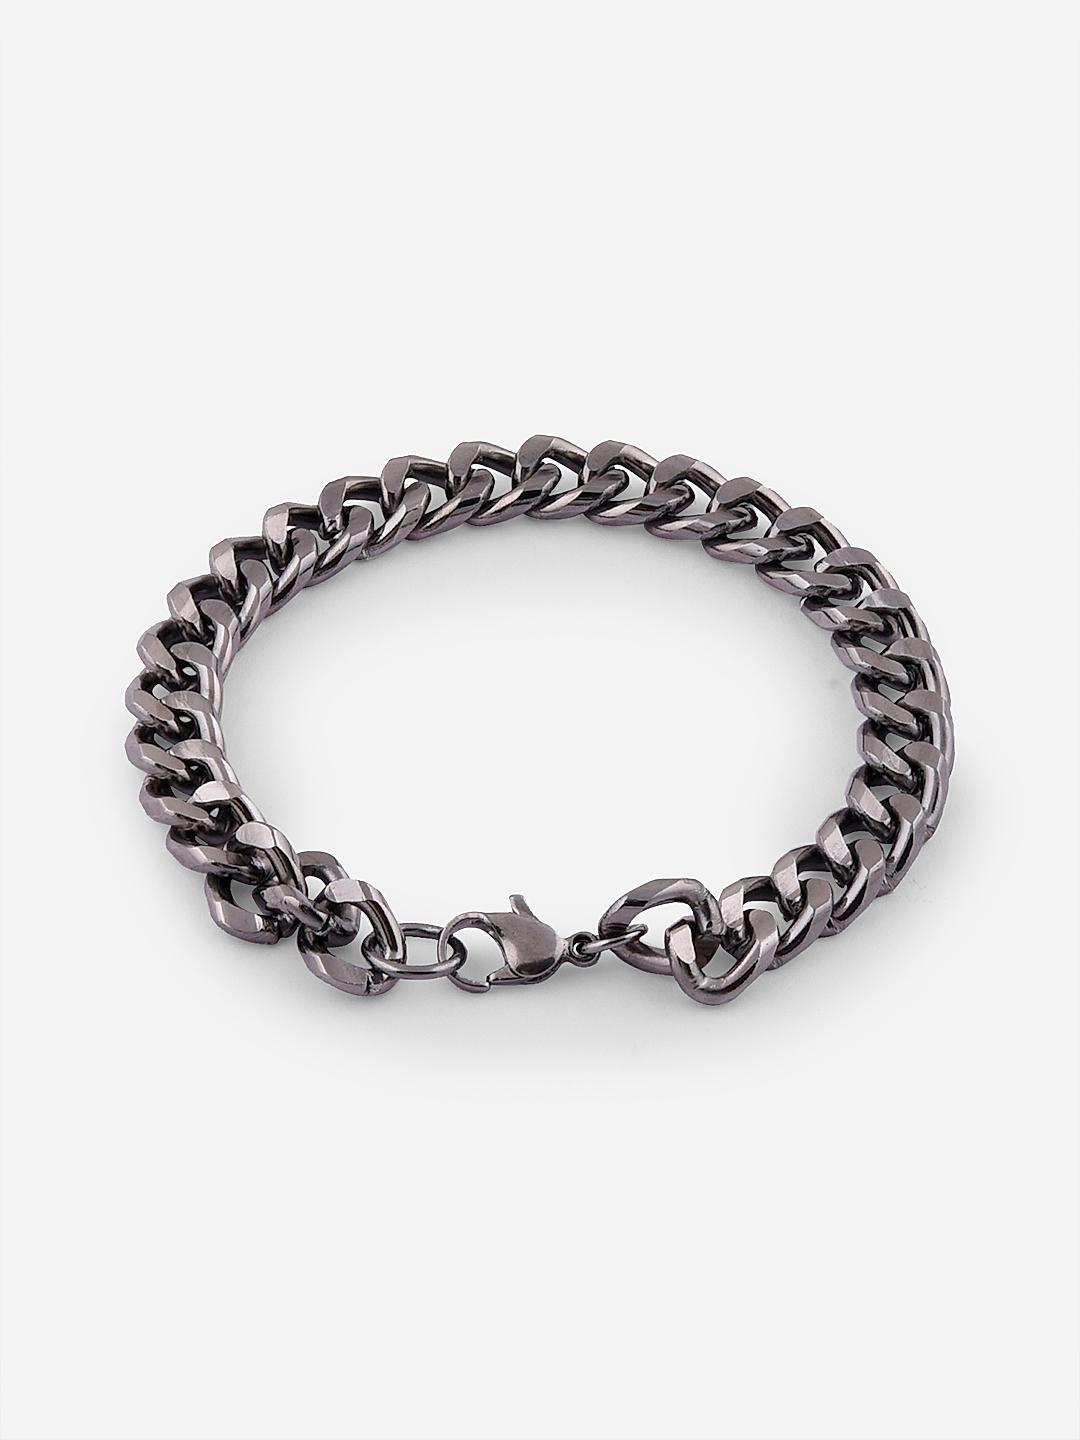 Gold Pearl Chunky Link Chain Bracelet 001-610-08366 | Miner's Den Jewelers  | Royal Oak, MI